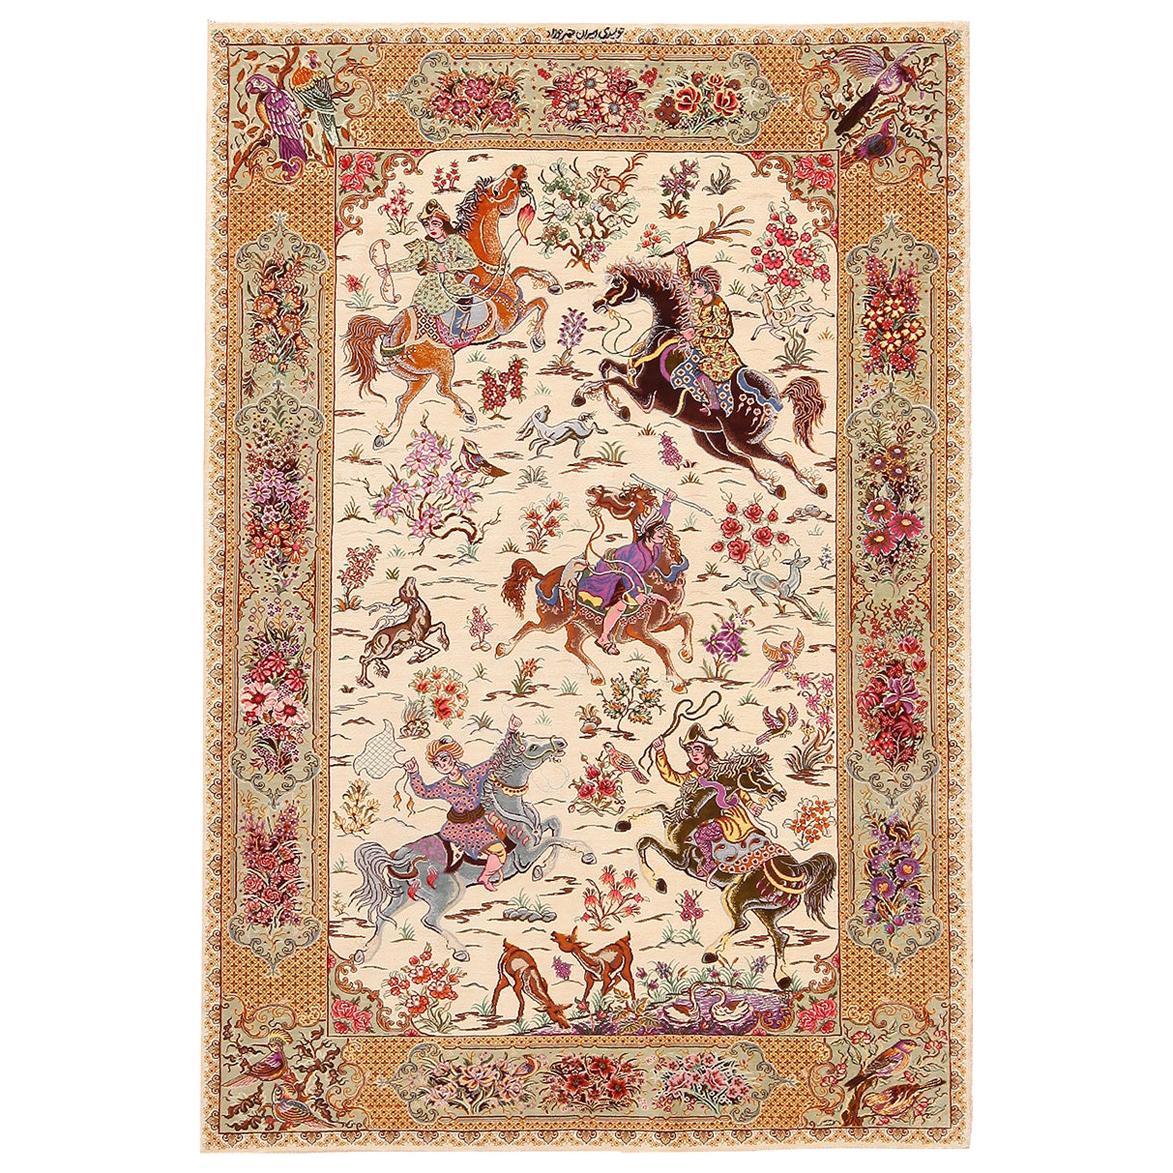 Hunting Design Vintage Persian Silk Qum Rug. 3 ft 3 in x 4 ft 10 in